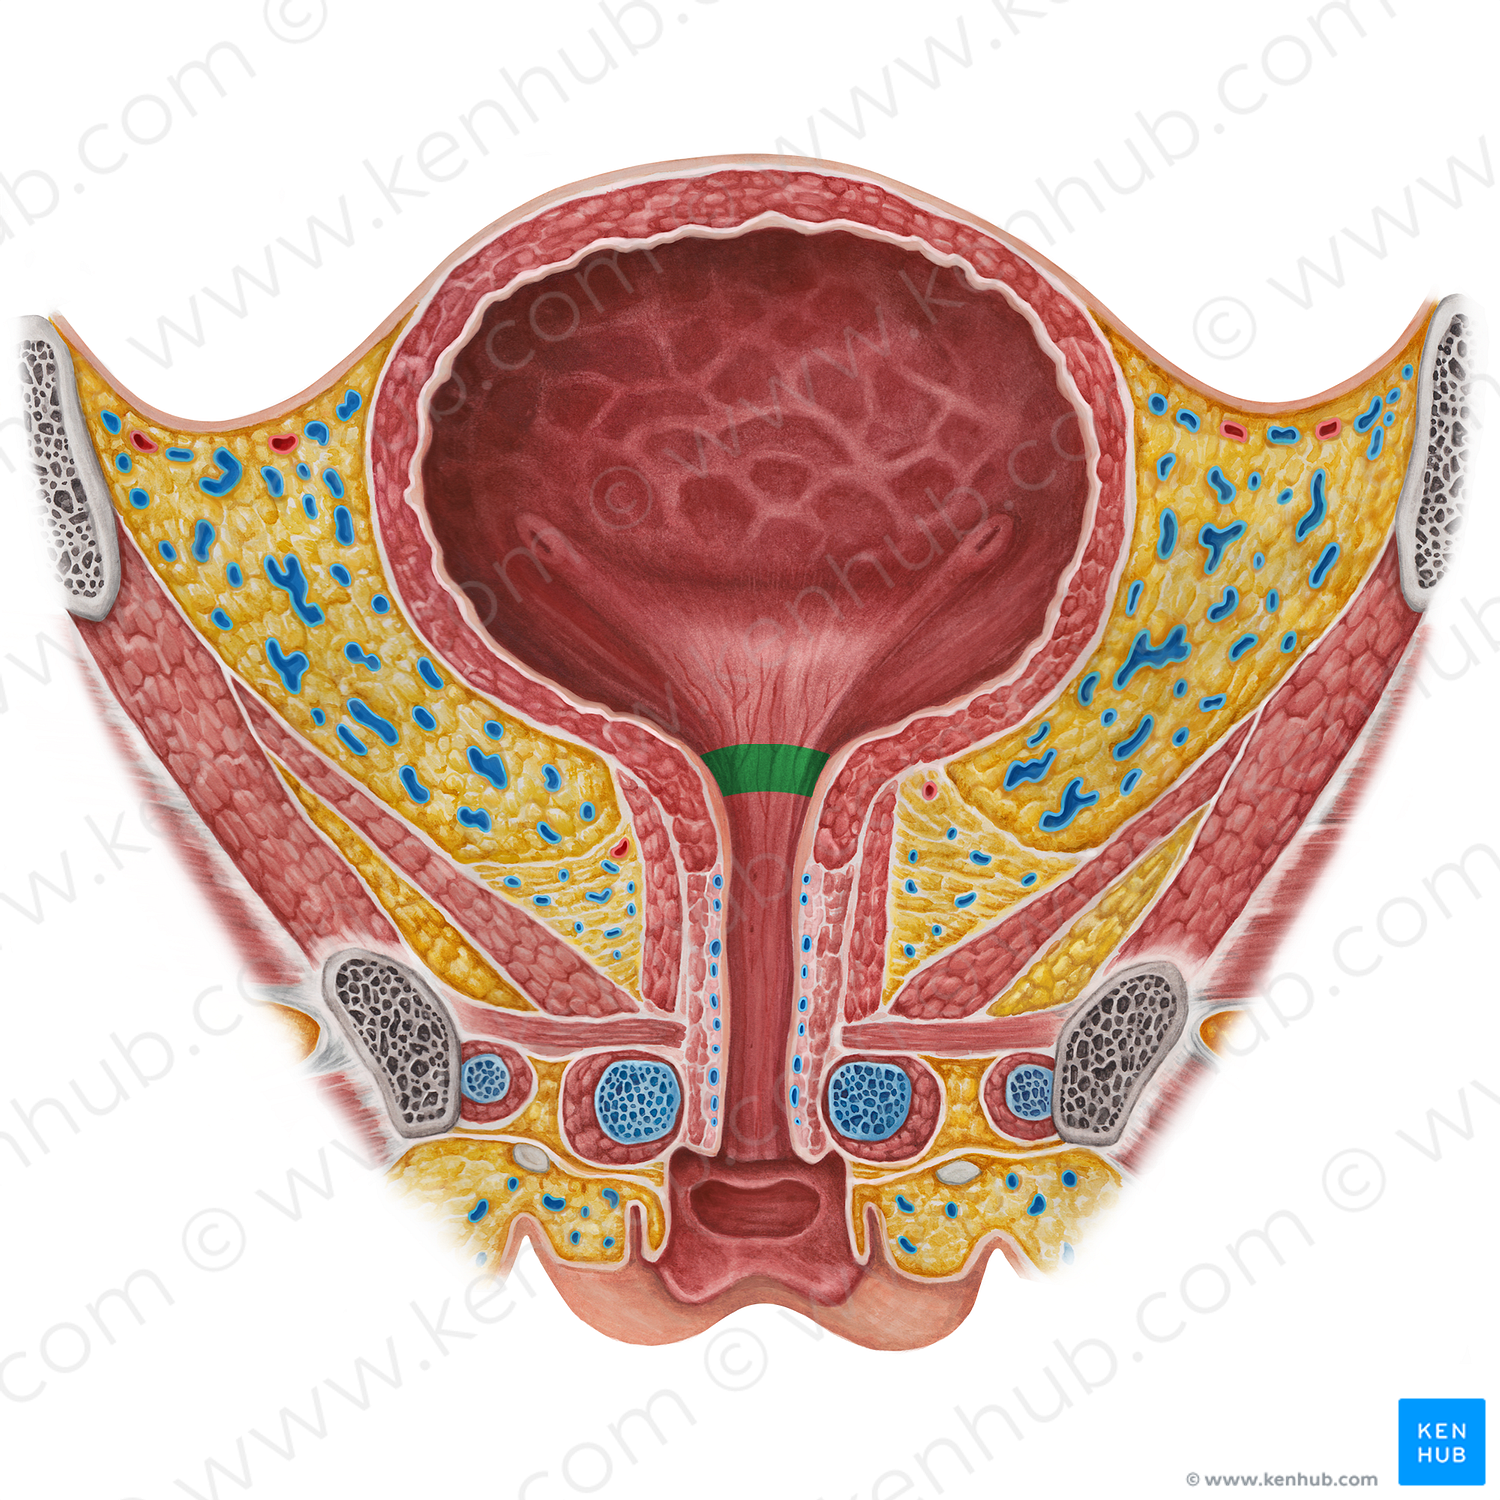 Neck of urinary bladder (#2582)